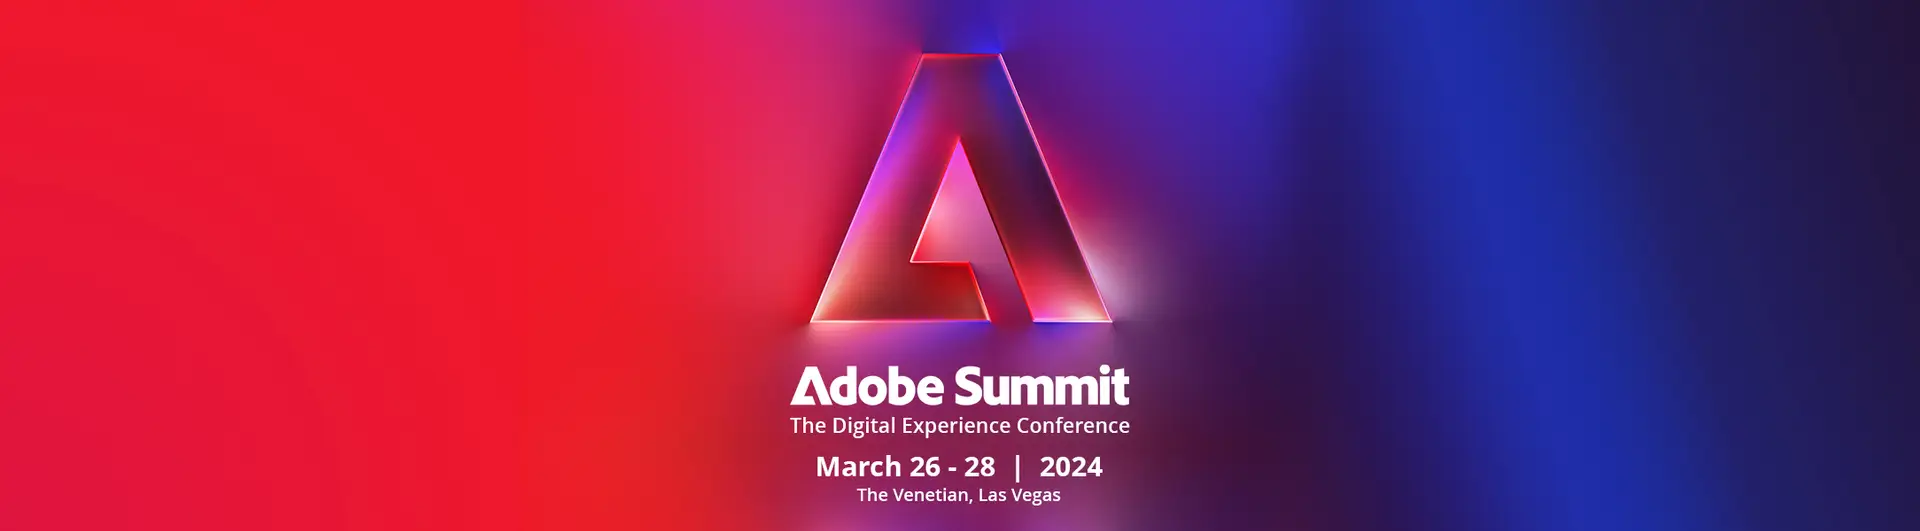 Web Banner Adobe Summit 2024